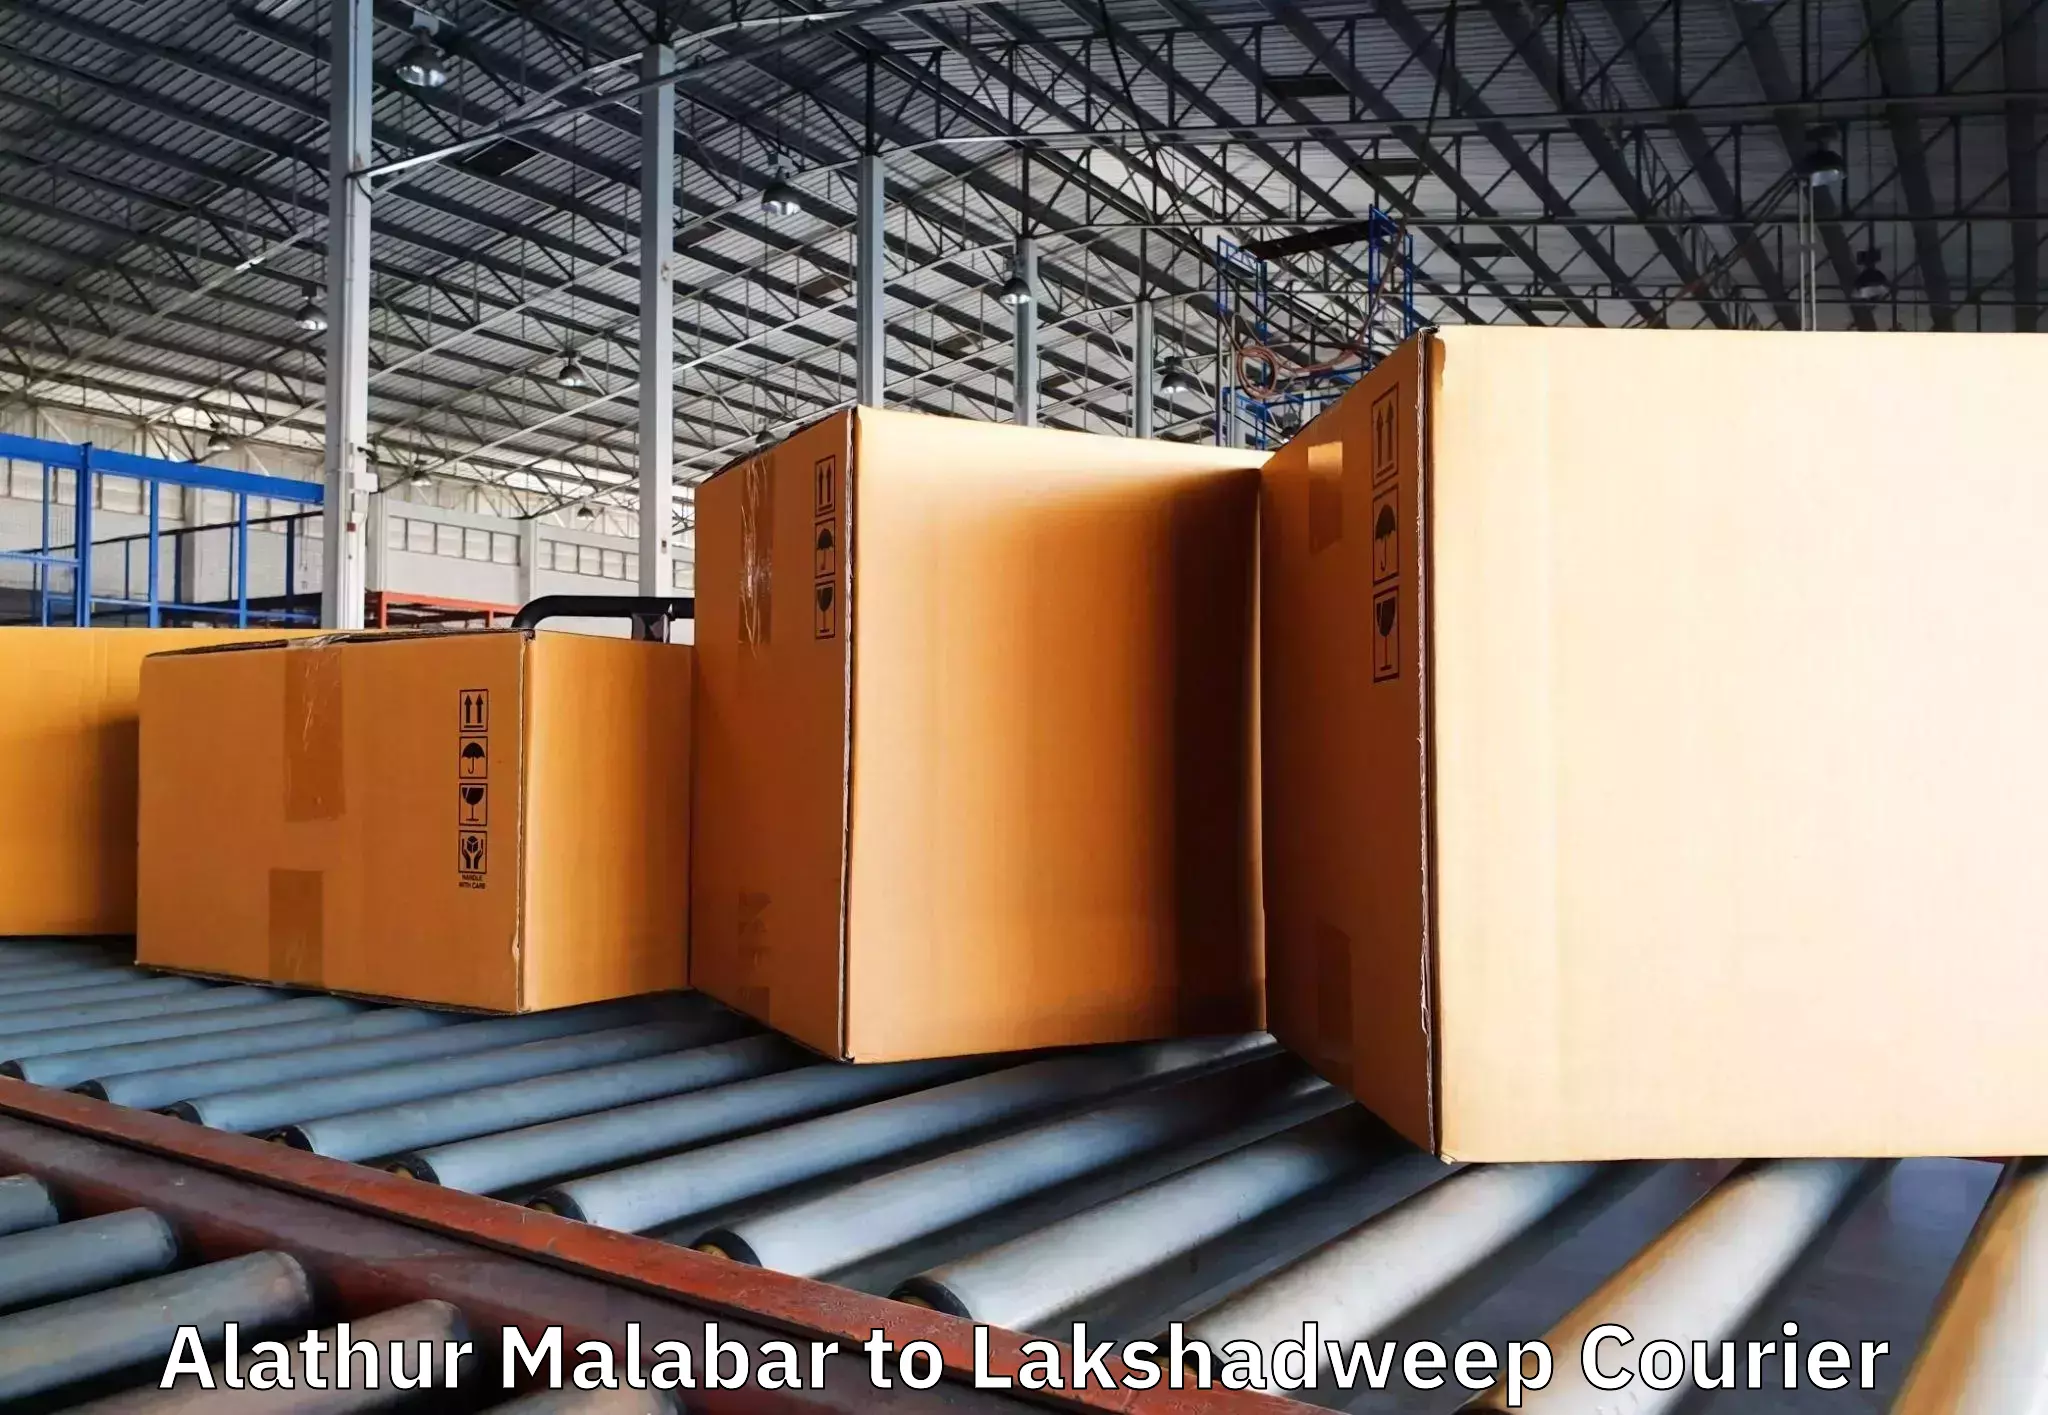 Quality moving company Alathur Malabar to Lakshadweep